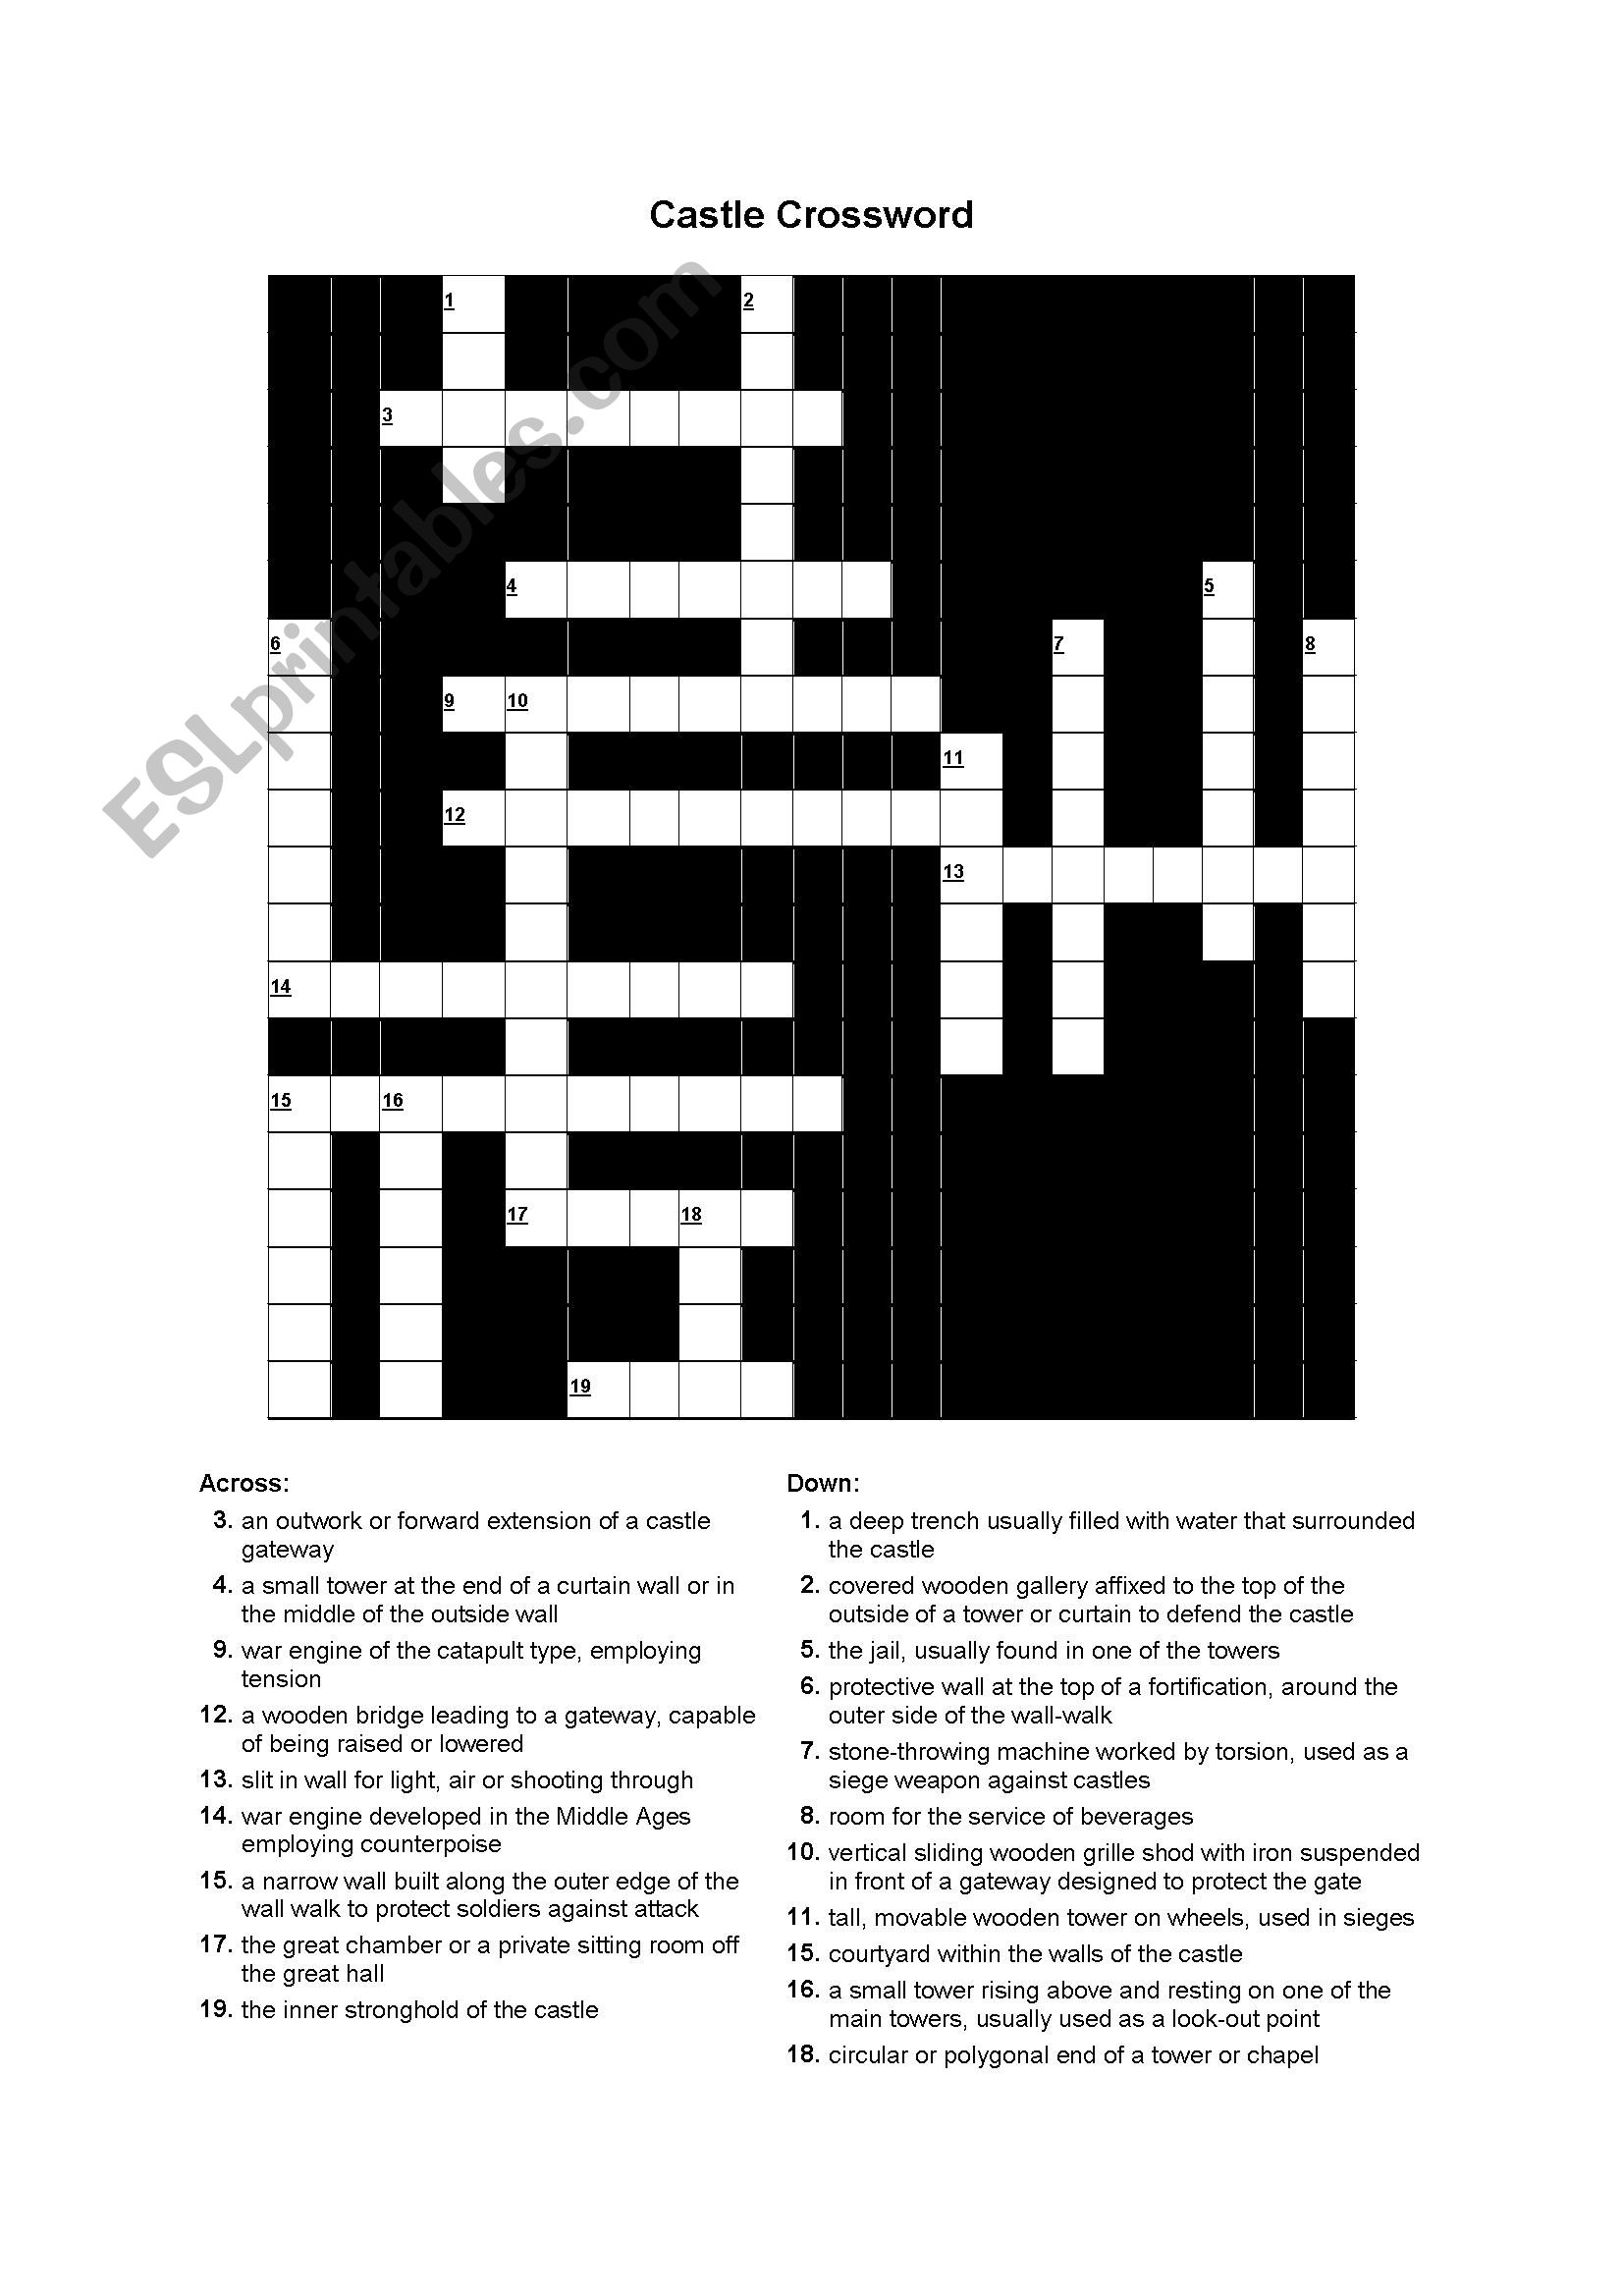 Castle Crossword worksheet